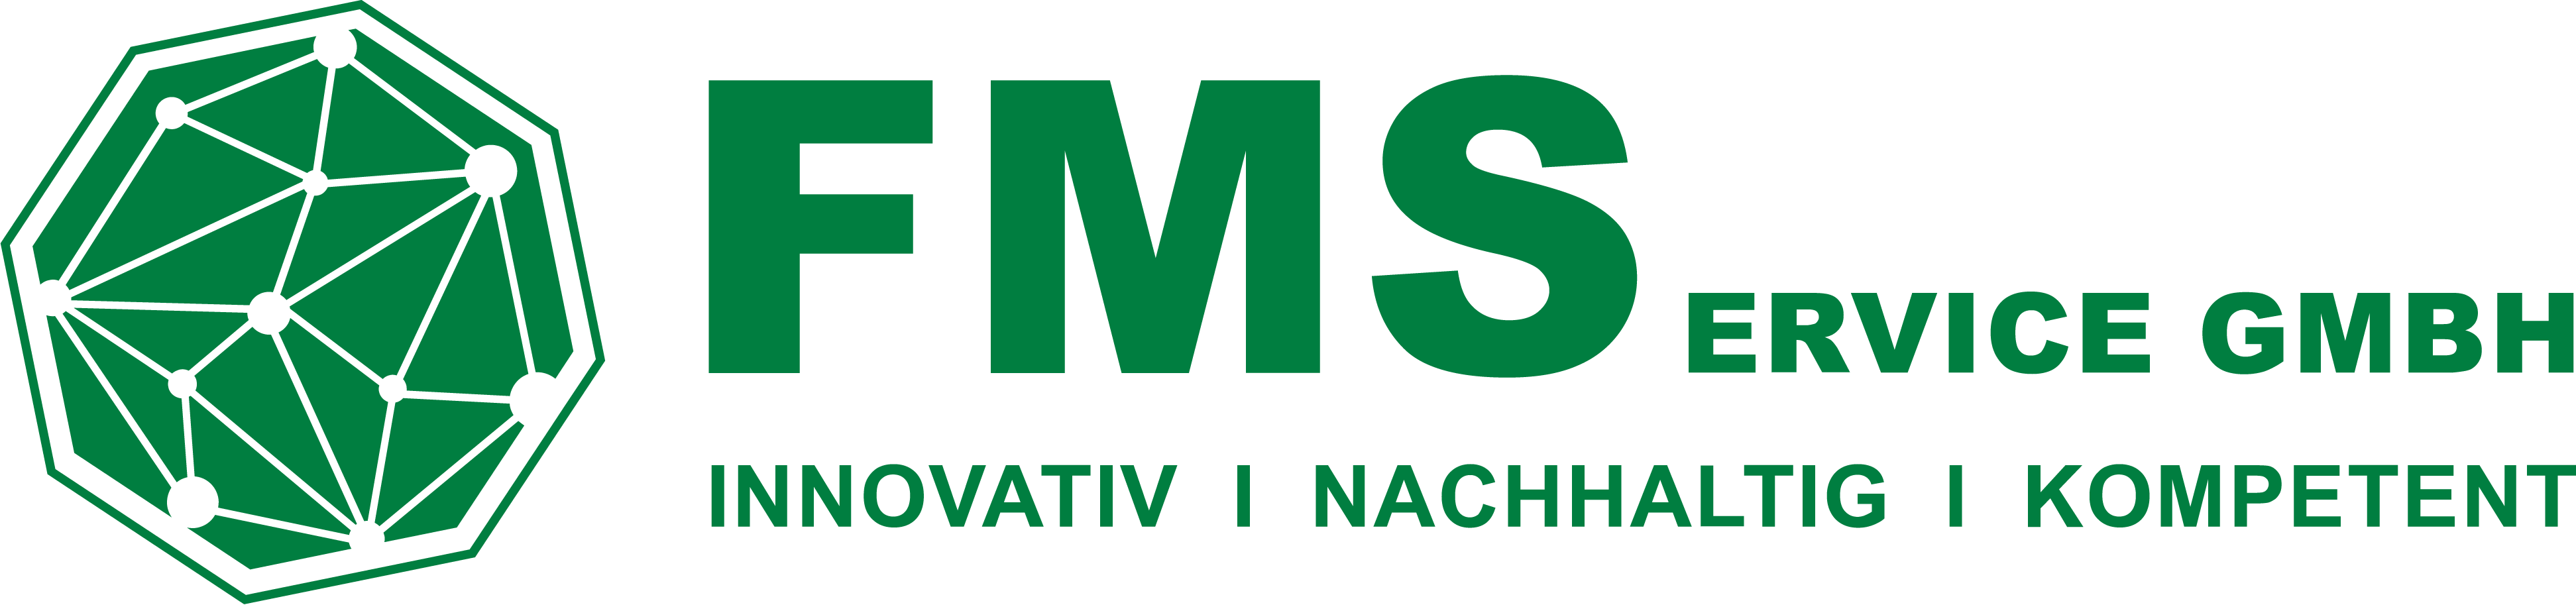 FMService GmbH